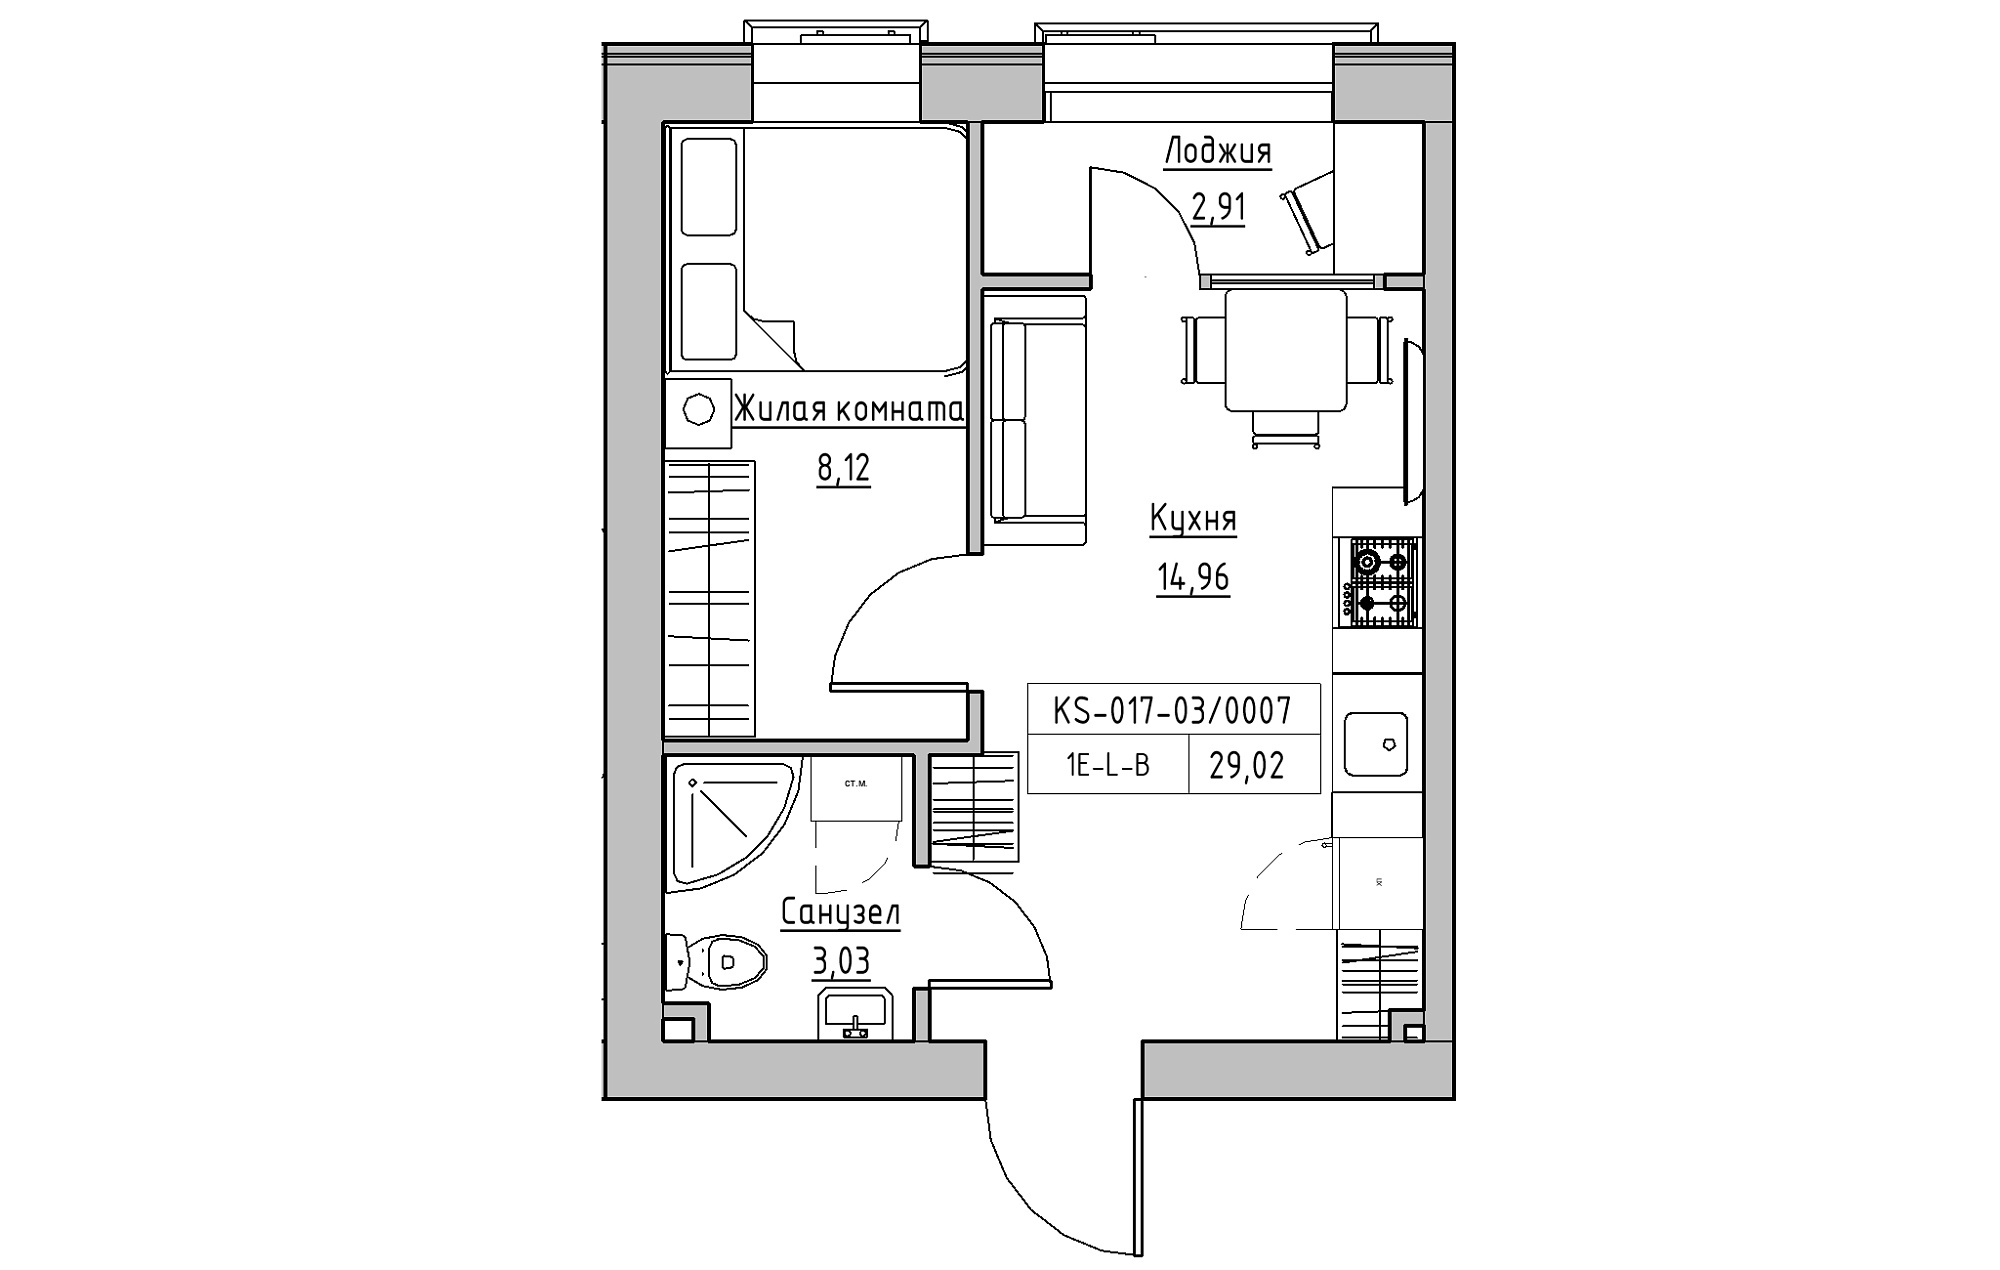 Planning 1-rm flats area 29.02m2, KS-017-03/0007.